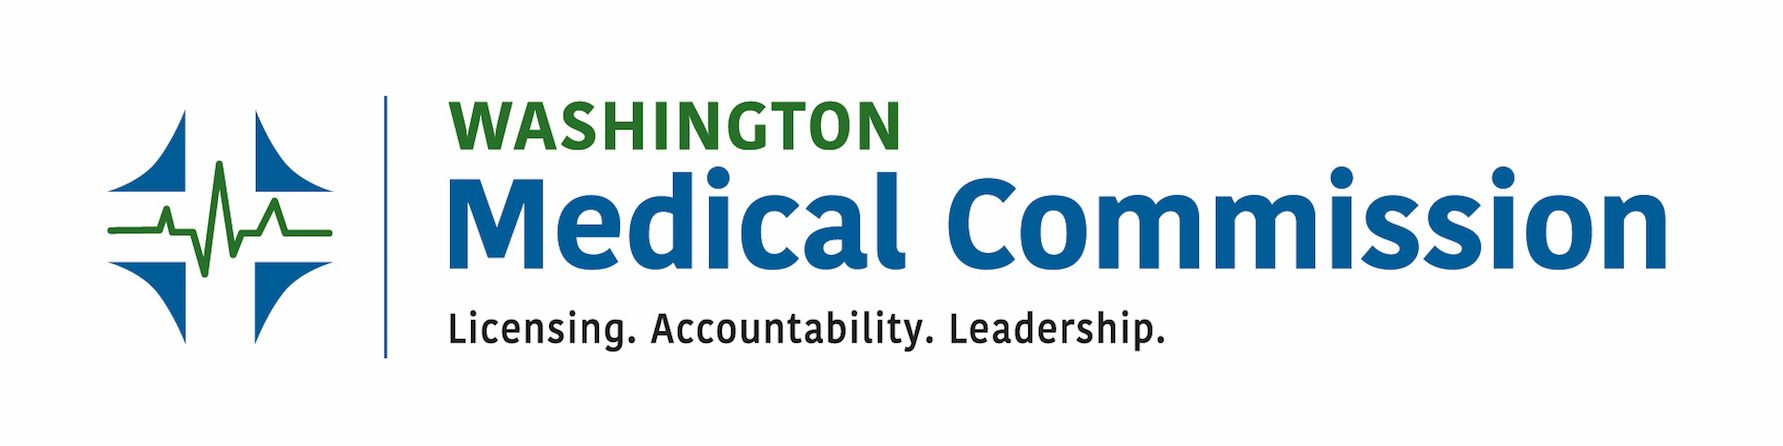 Washington Medical Commission Banner